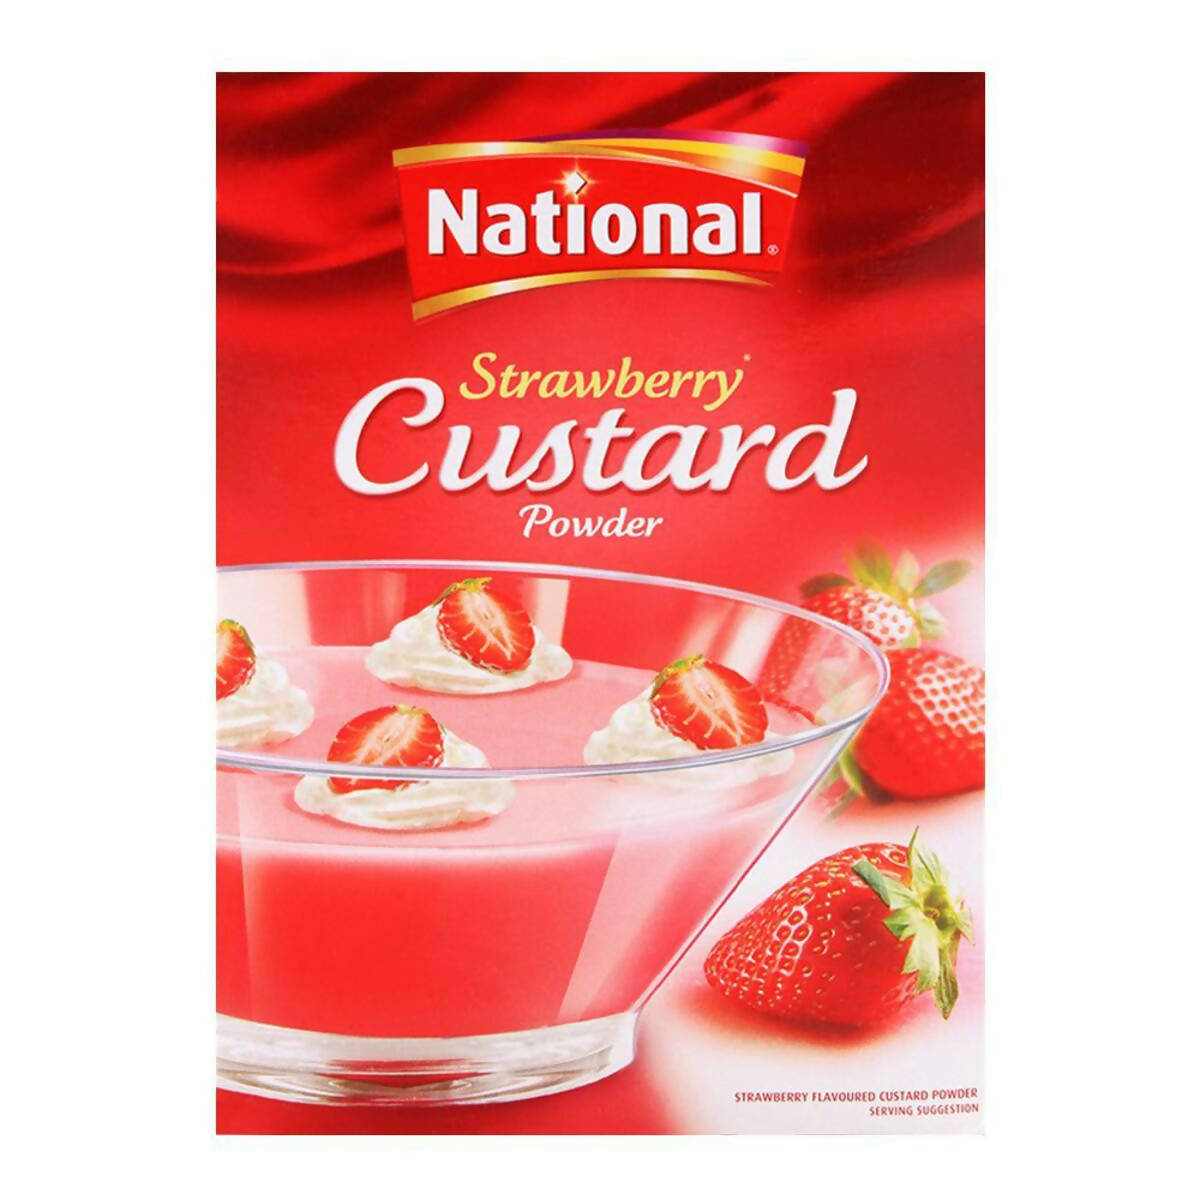 Nation Strawberry Custard Powder 300 gm box 1 pcs